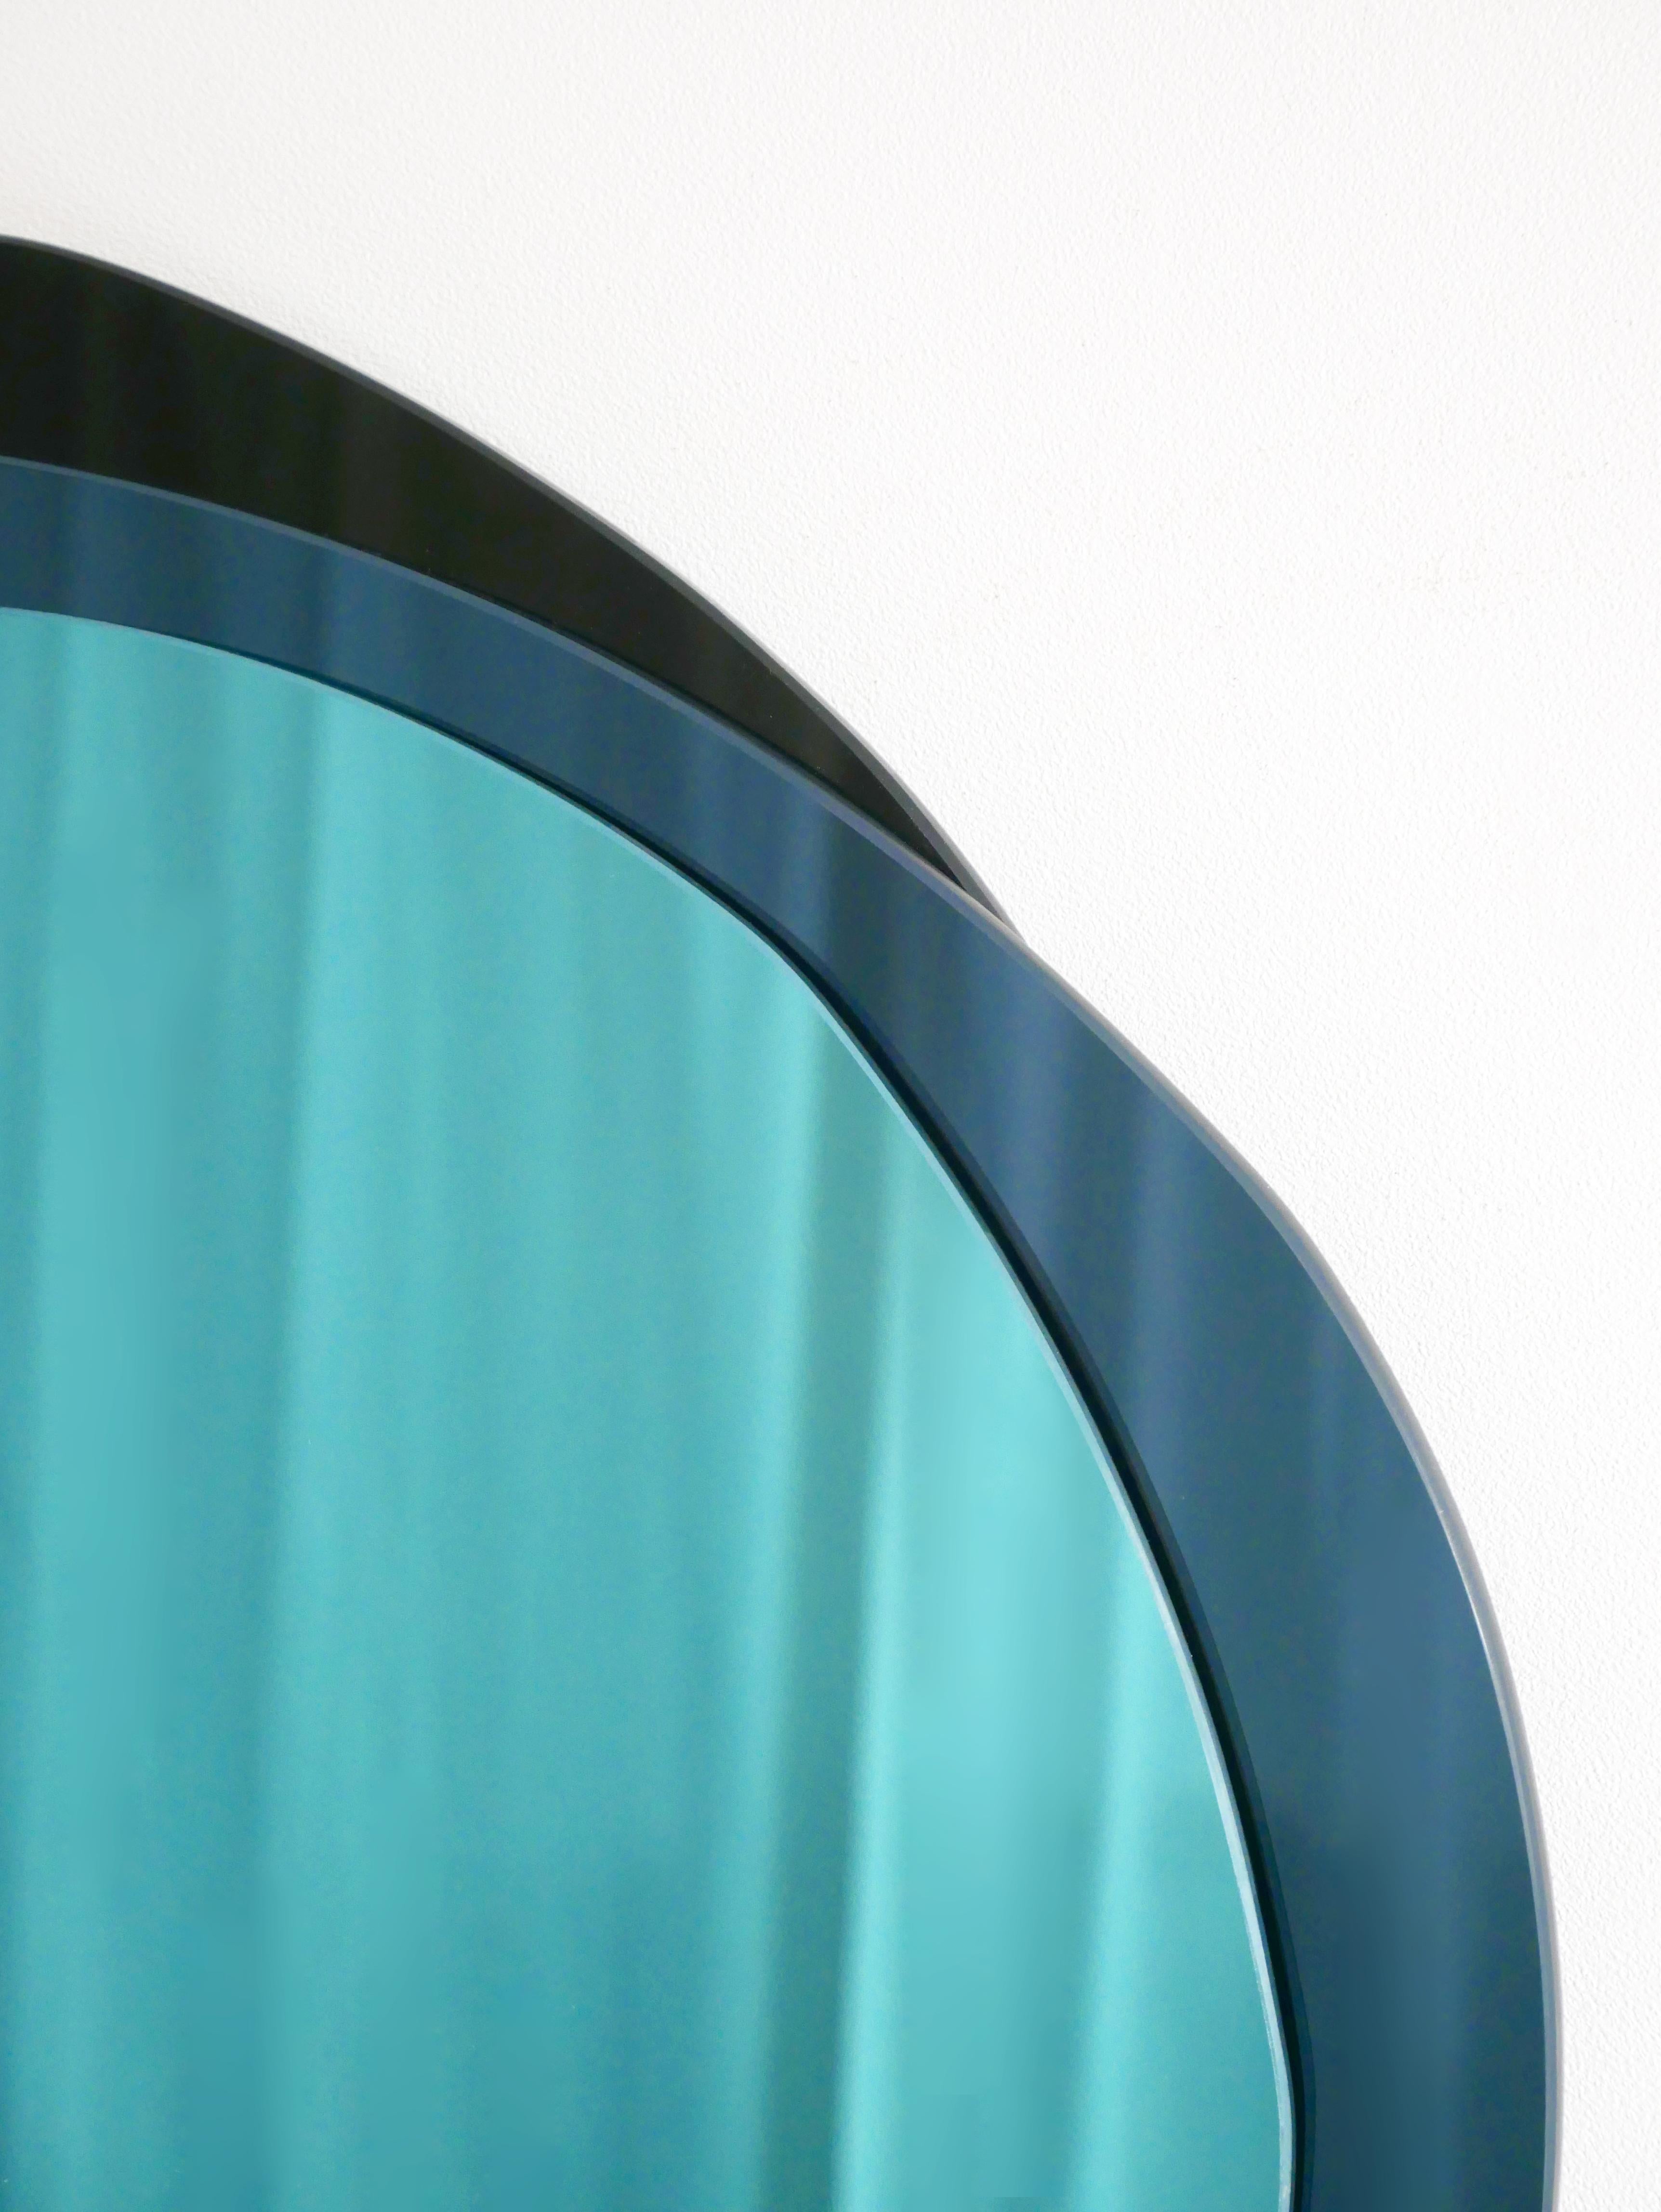 Lunar X-large hand-sculpted mirror, Laurene Guarneri
Limited edition.
Handmade.
Materials: Sky blue colored mirror, dark blue colored mirror, dark colored mirror
Dimensions: 100 x 100 cm

Laurène Guarneri is a designer based in